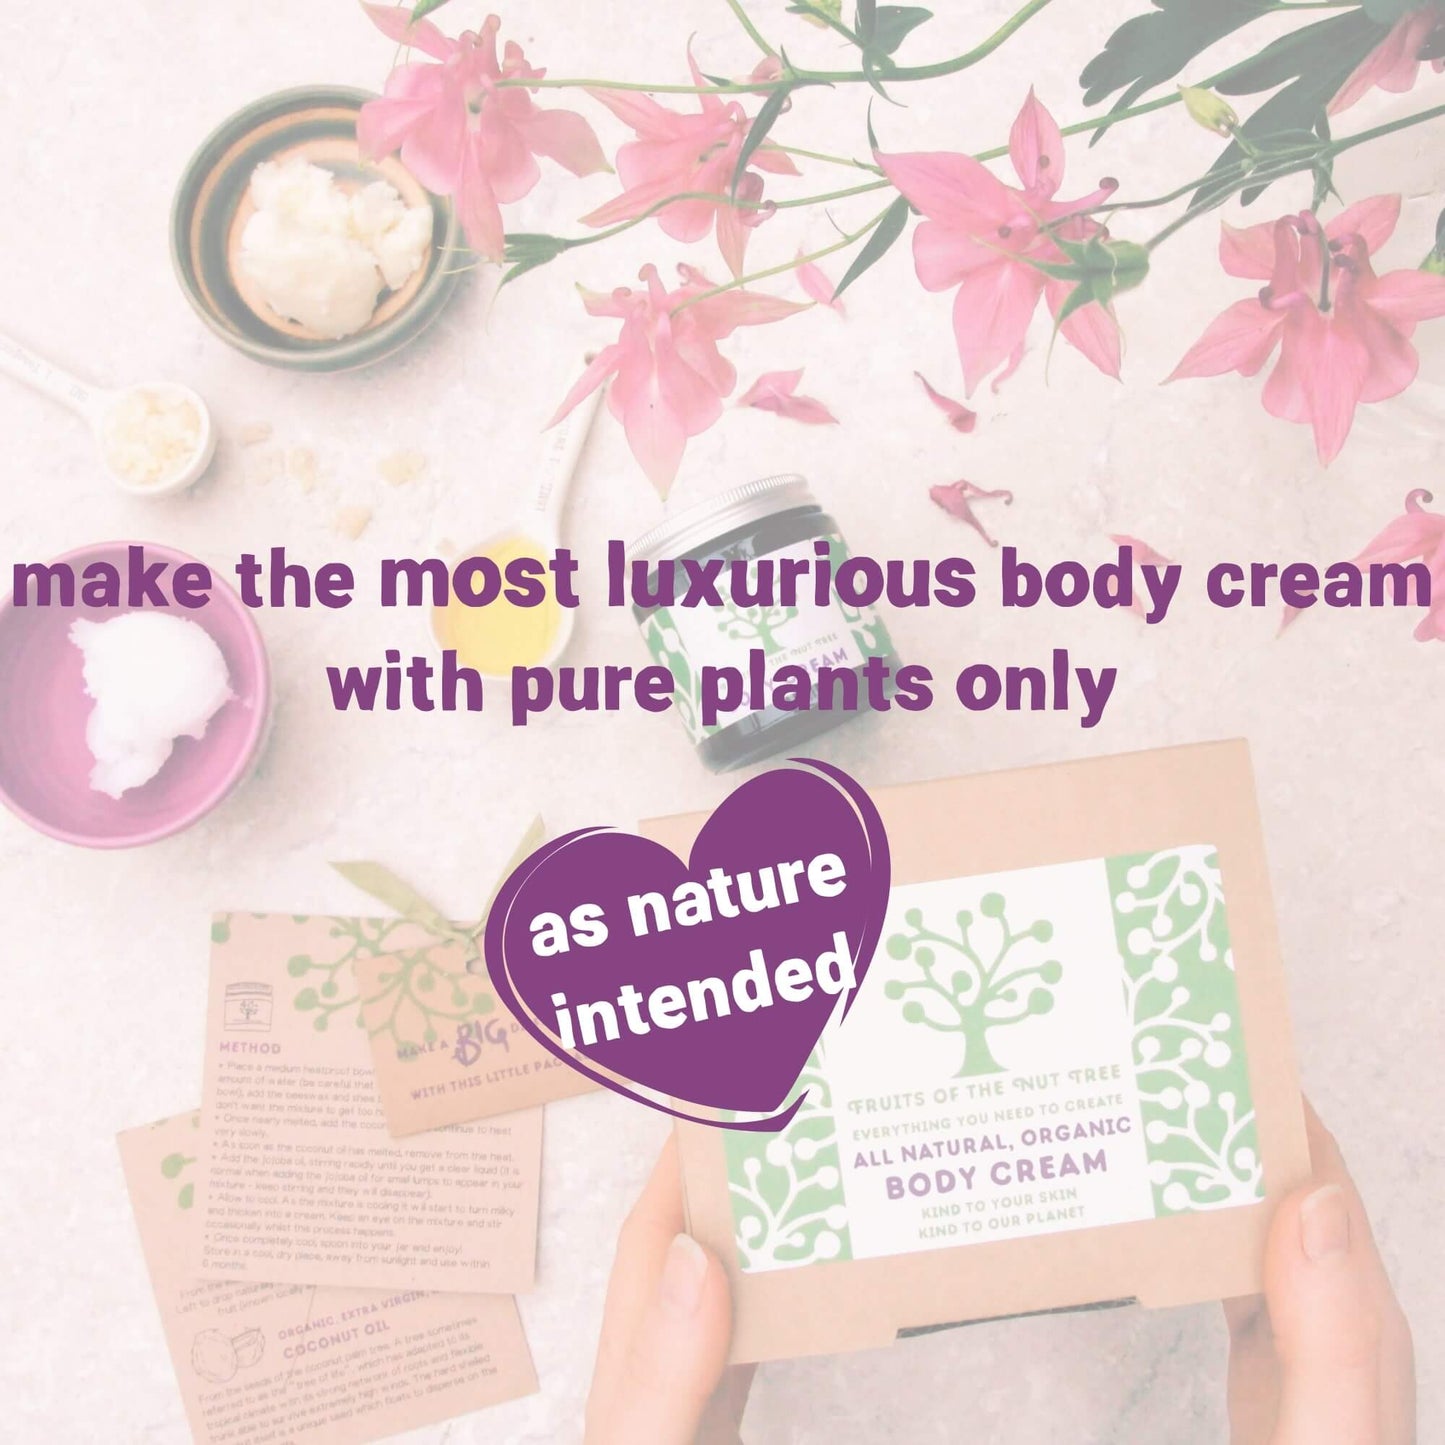 natural organic ingredients to make eco-friendly moisturiser